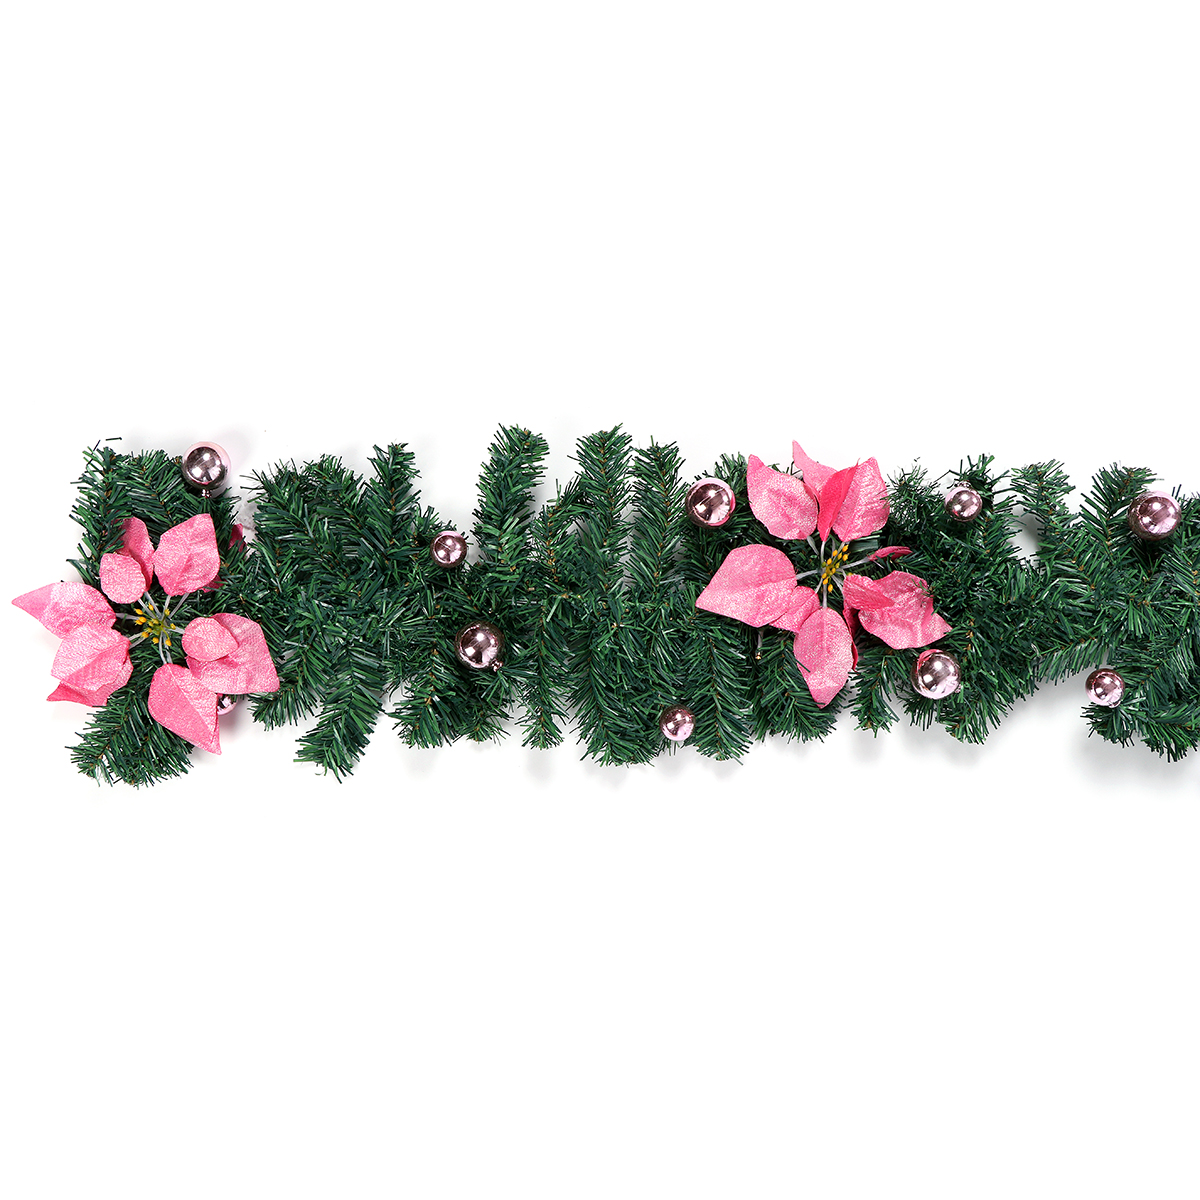 27m-Christmas-Tree-Wreath-Door-Hanging-Garland-Window-Ornament-Xmas-Party-Decor-Christmas-Decoration-1771839-15